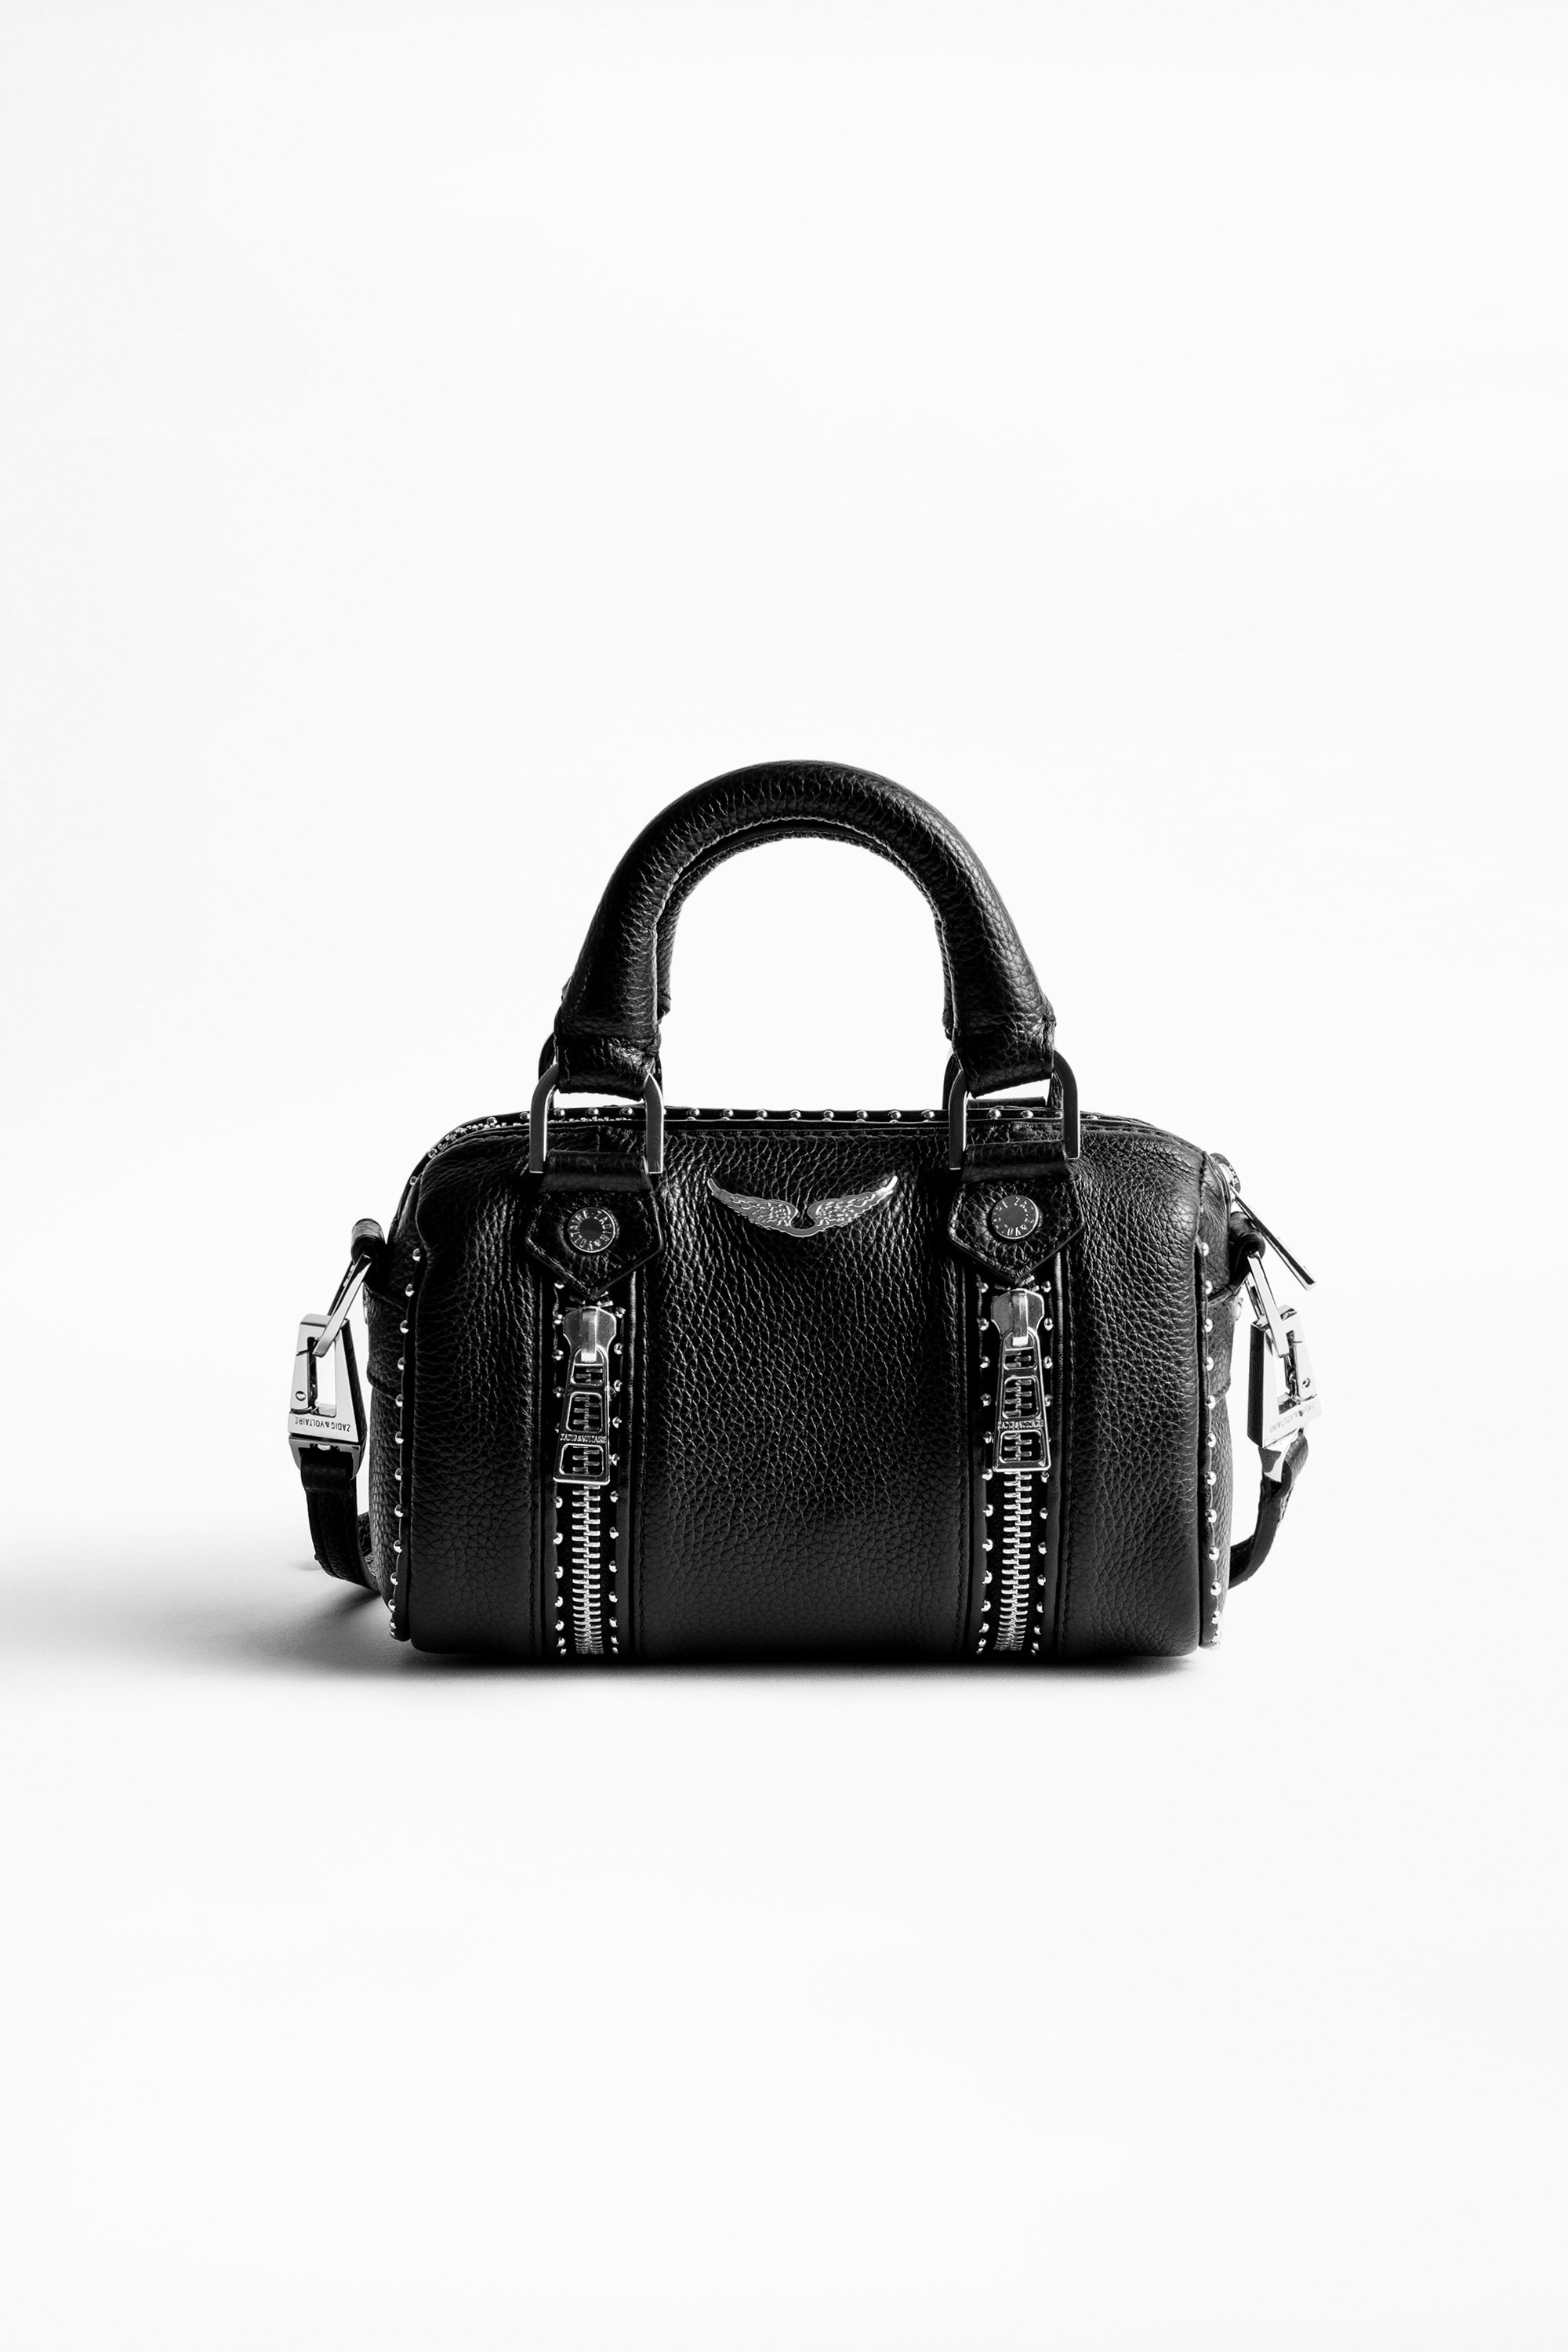 Sunny ミニバッグ Women's black mini bag in grained leather.